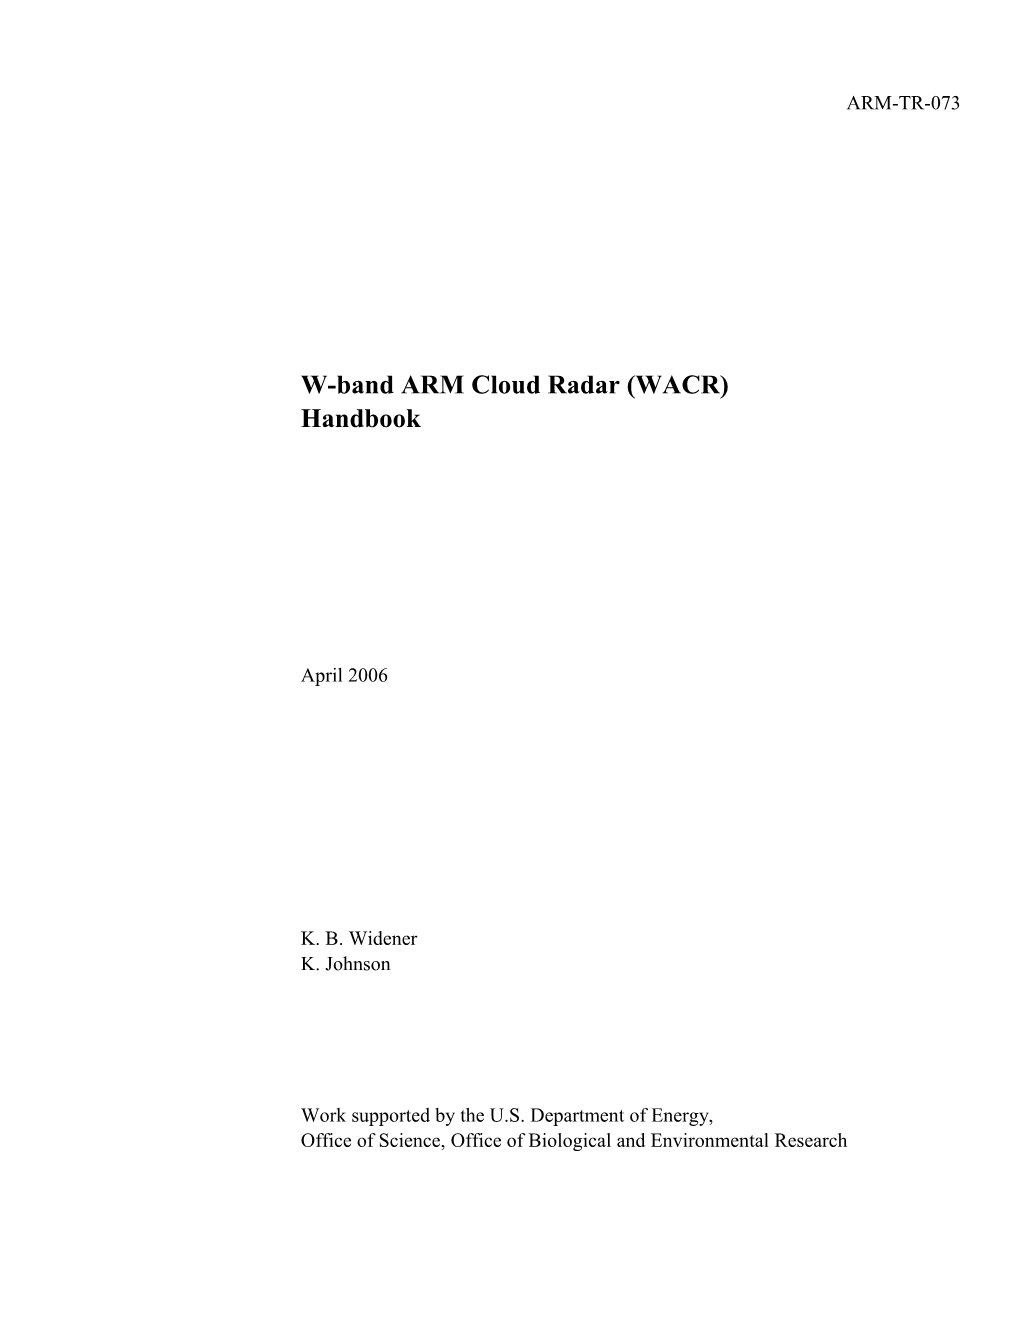 W-Band ARM Cloud Radar (WACR) Handbook